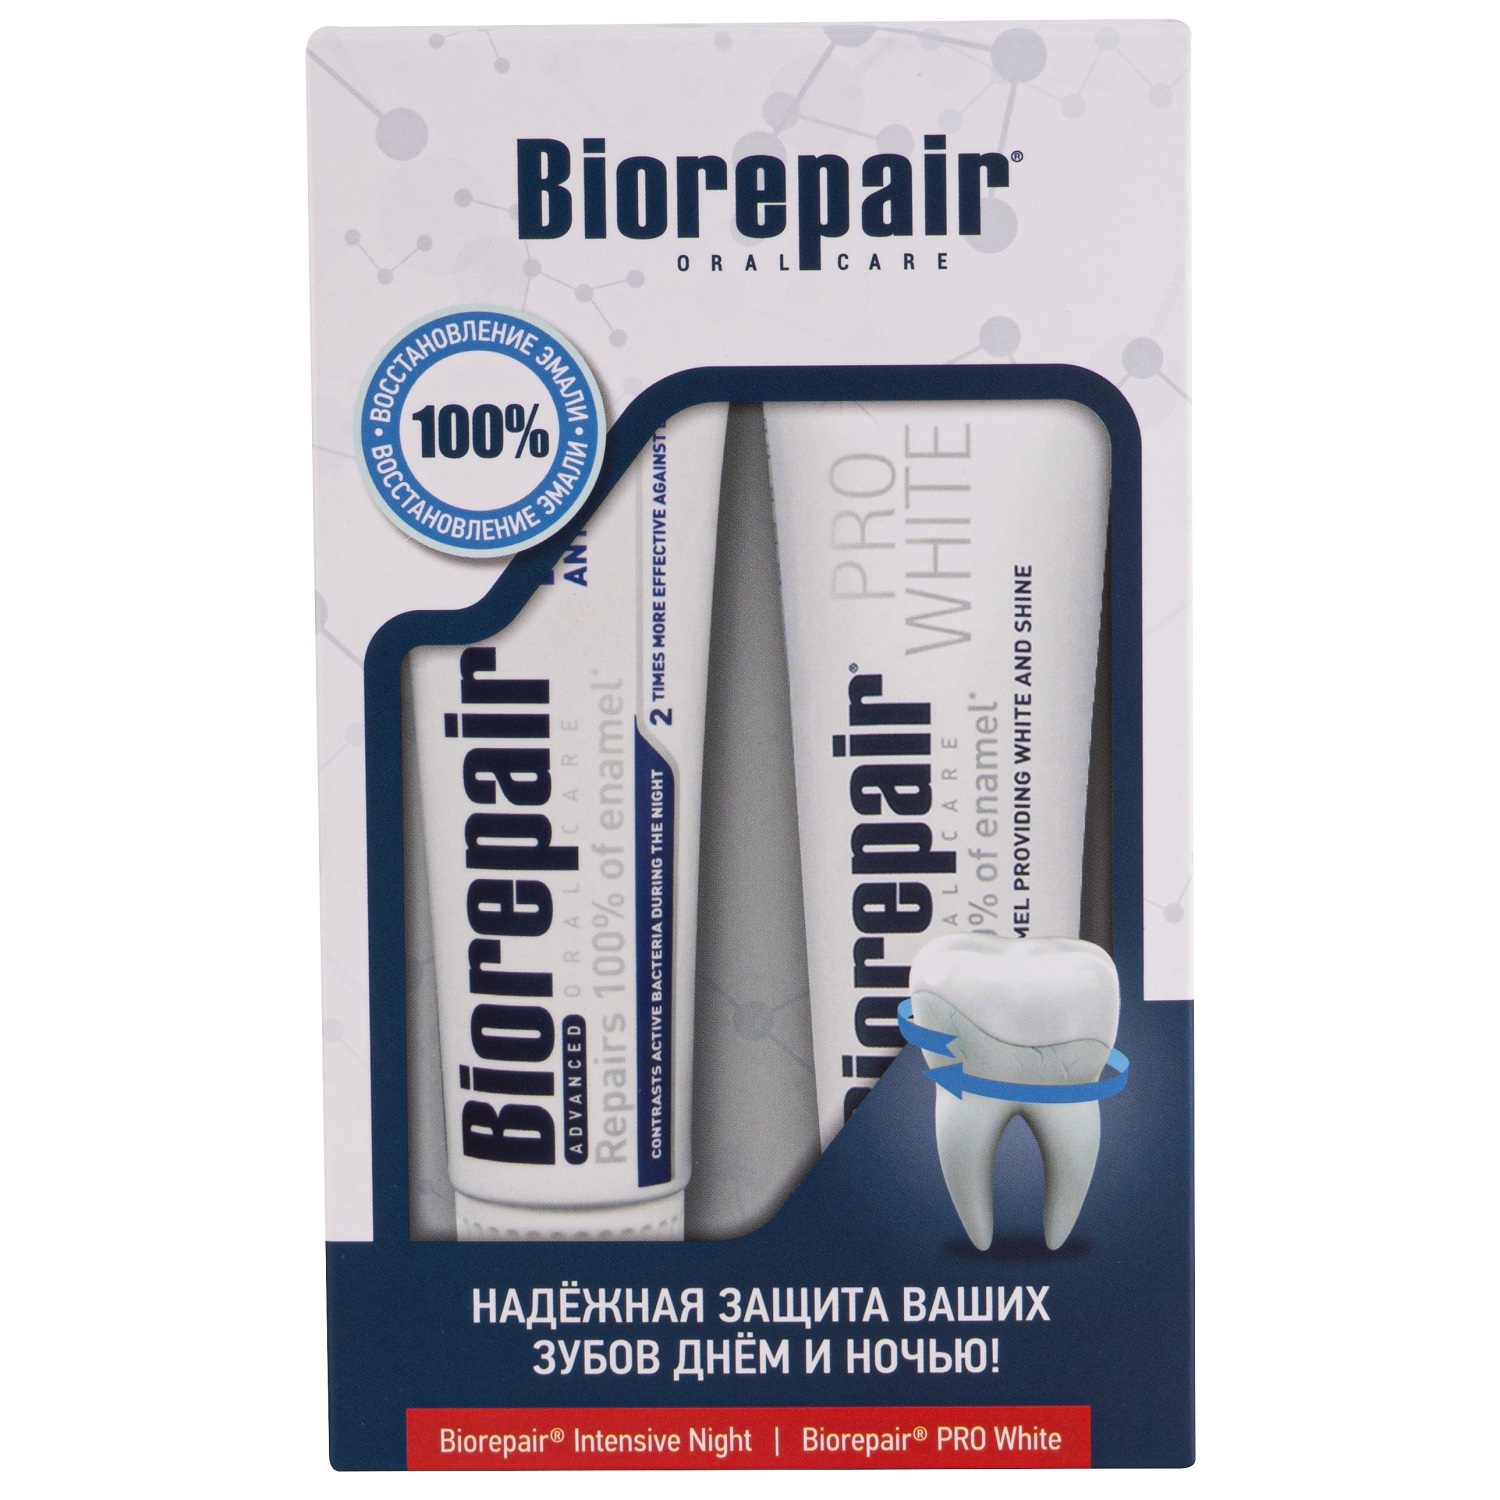 Biorepair Набор зубных паст Защита и блеск: Pro White 75 мл + Intensive Night Repair 75 мл (Biorepair, Отбеливание и лечение) лечение молитвами и заговорами